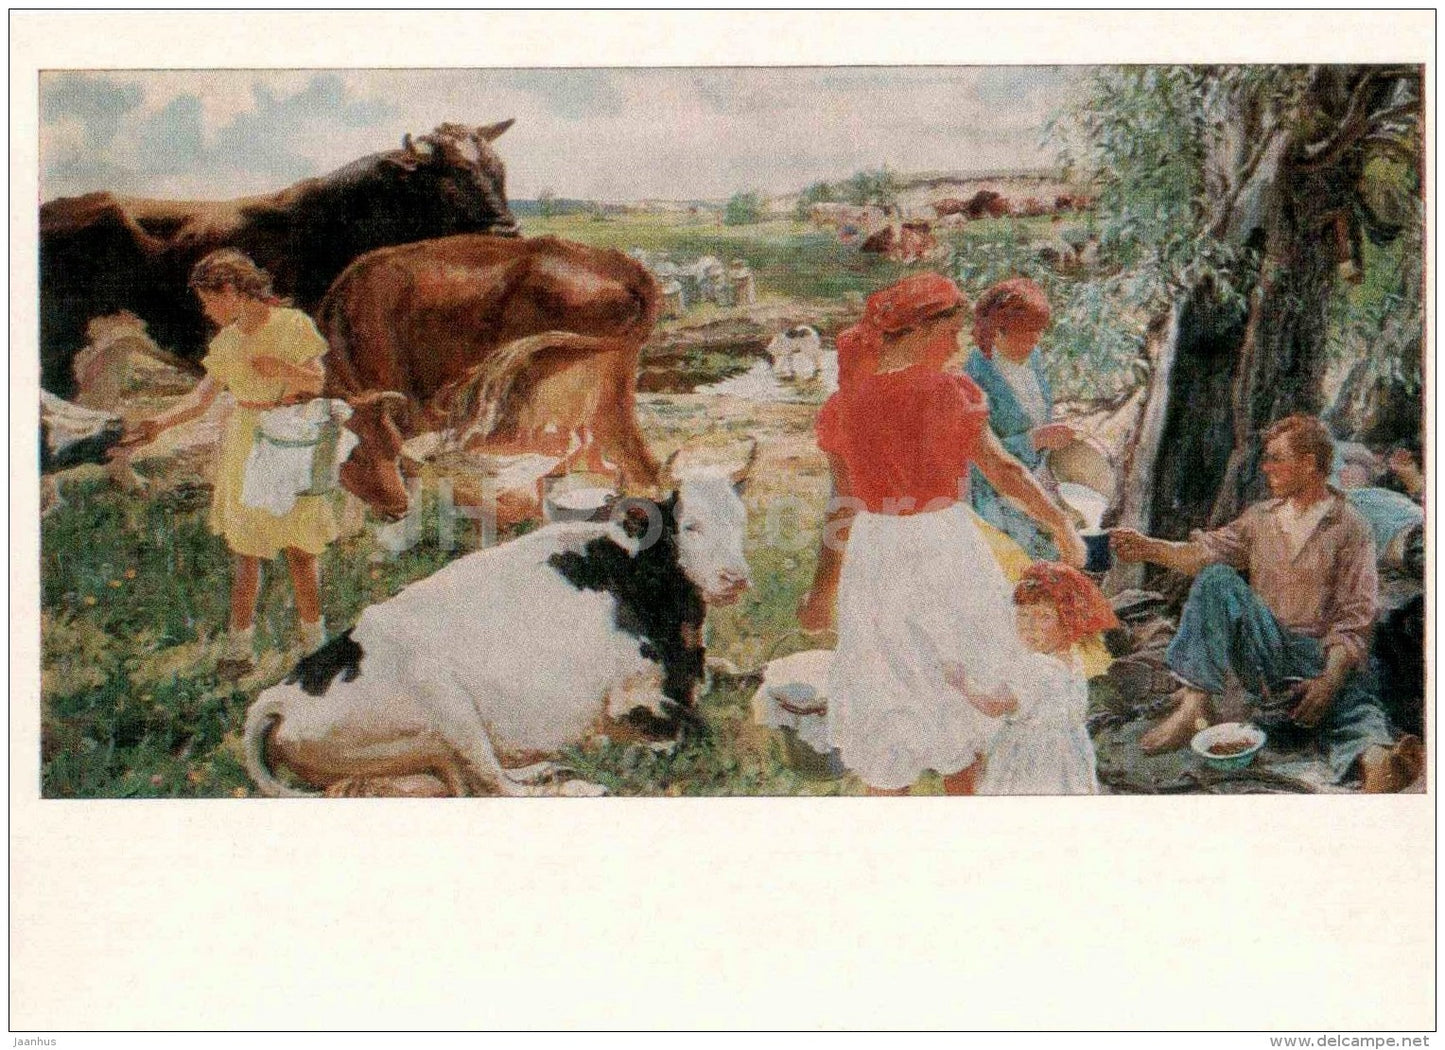 Portrait of A. Plastov - Summer , 1959-60 - cow - Soviet Countryside - Russian art - 1978 - Russia USSR - unused - JH Postcards